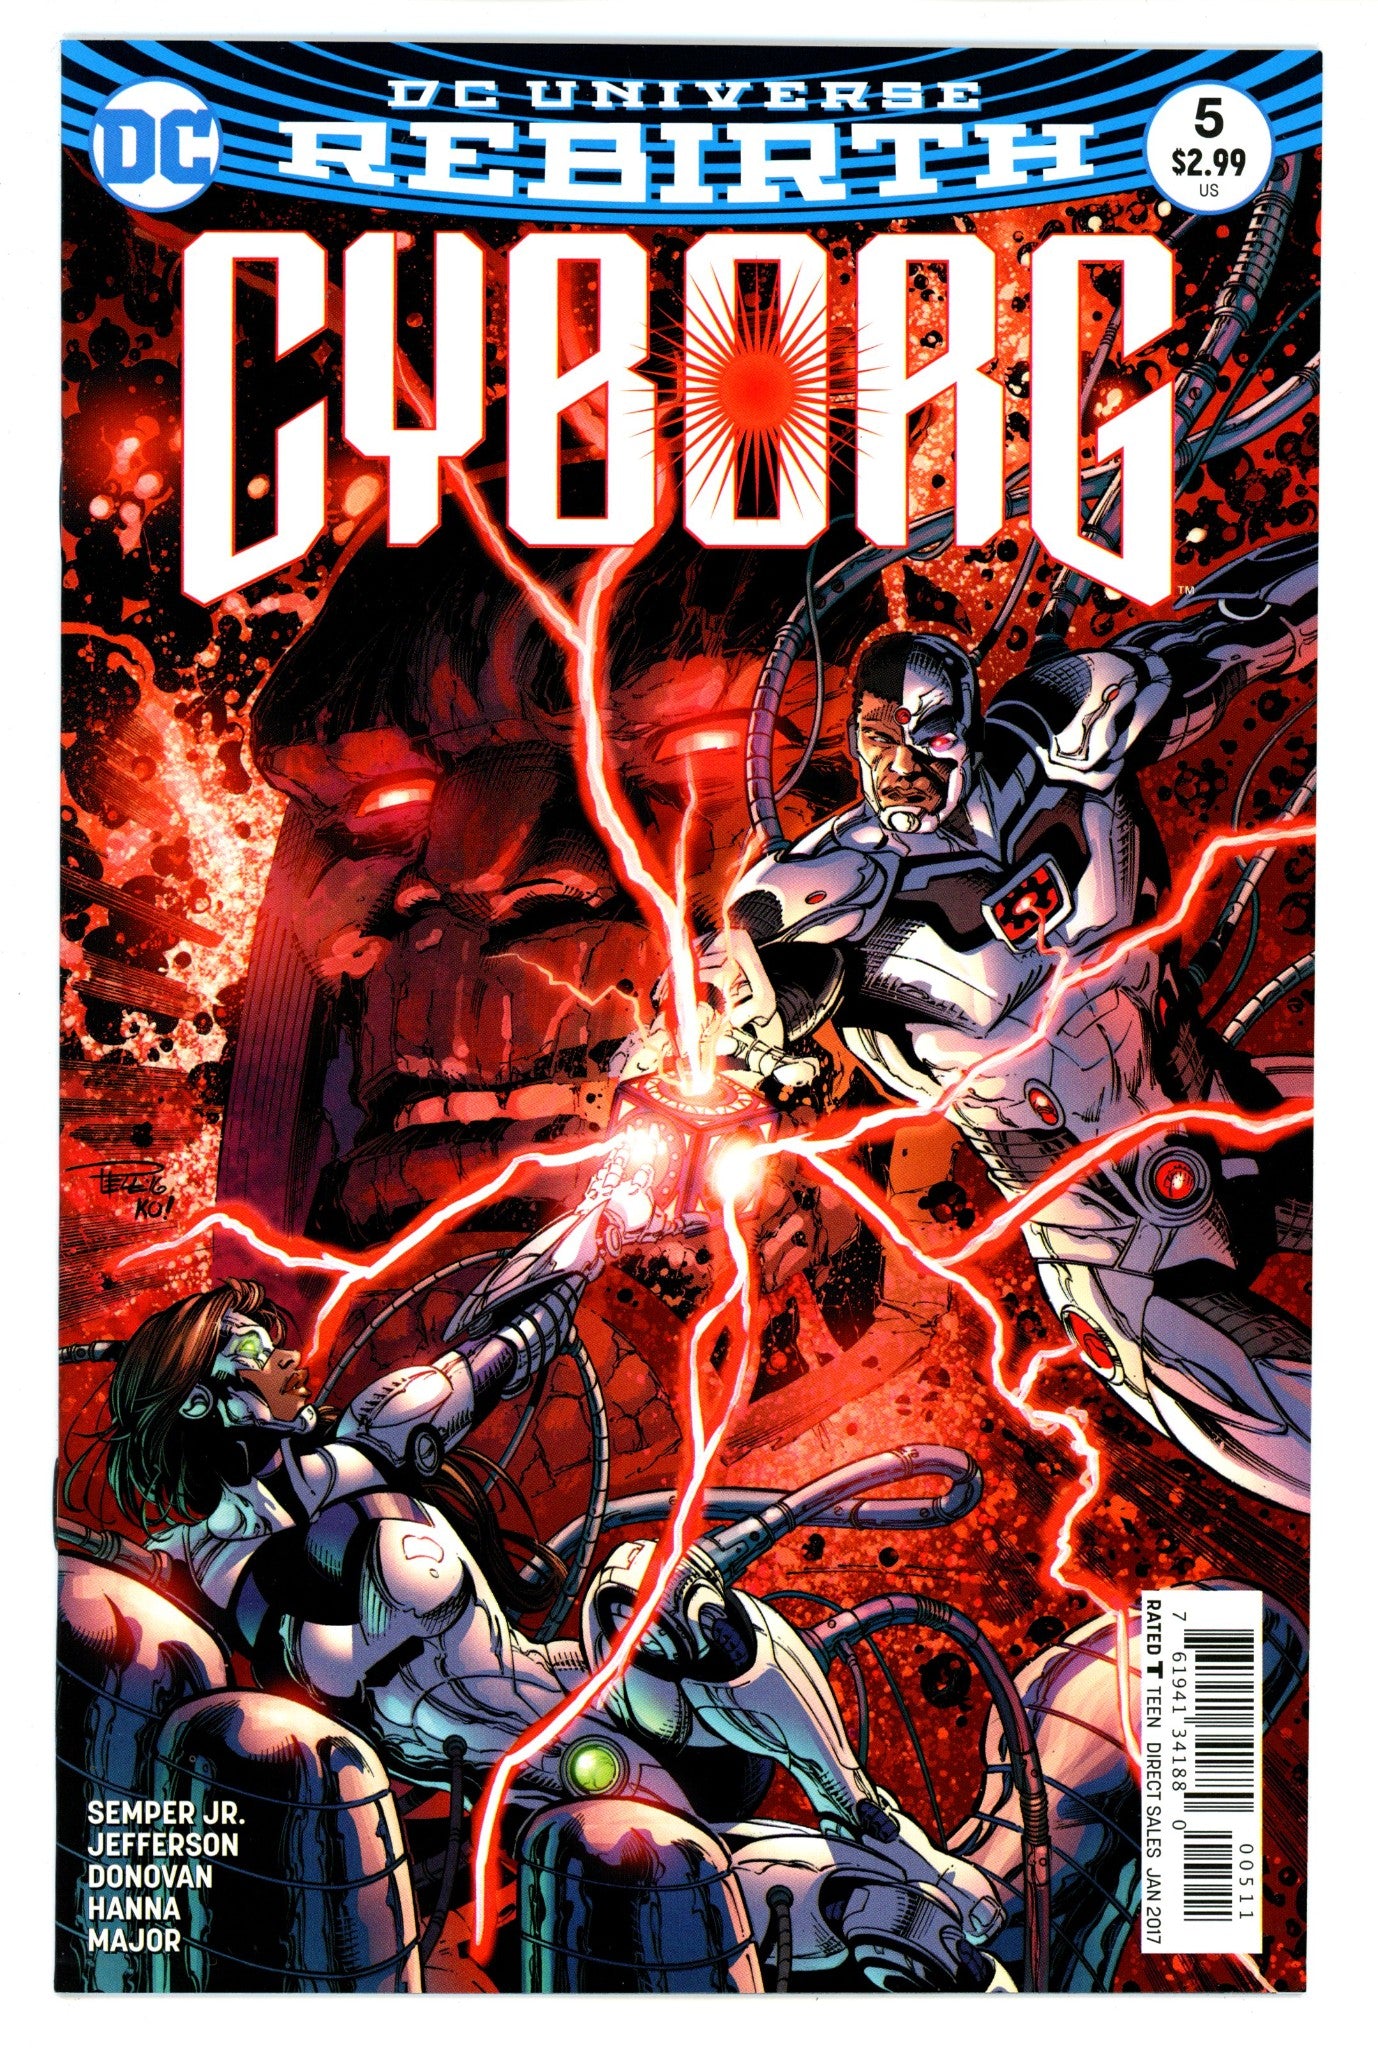 Cyborg Vol 2 5 High Grade (2017) 